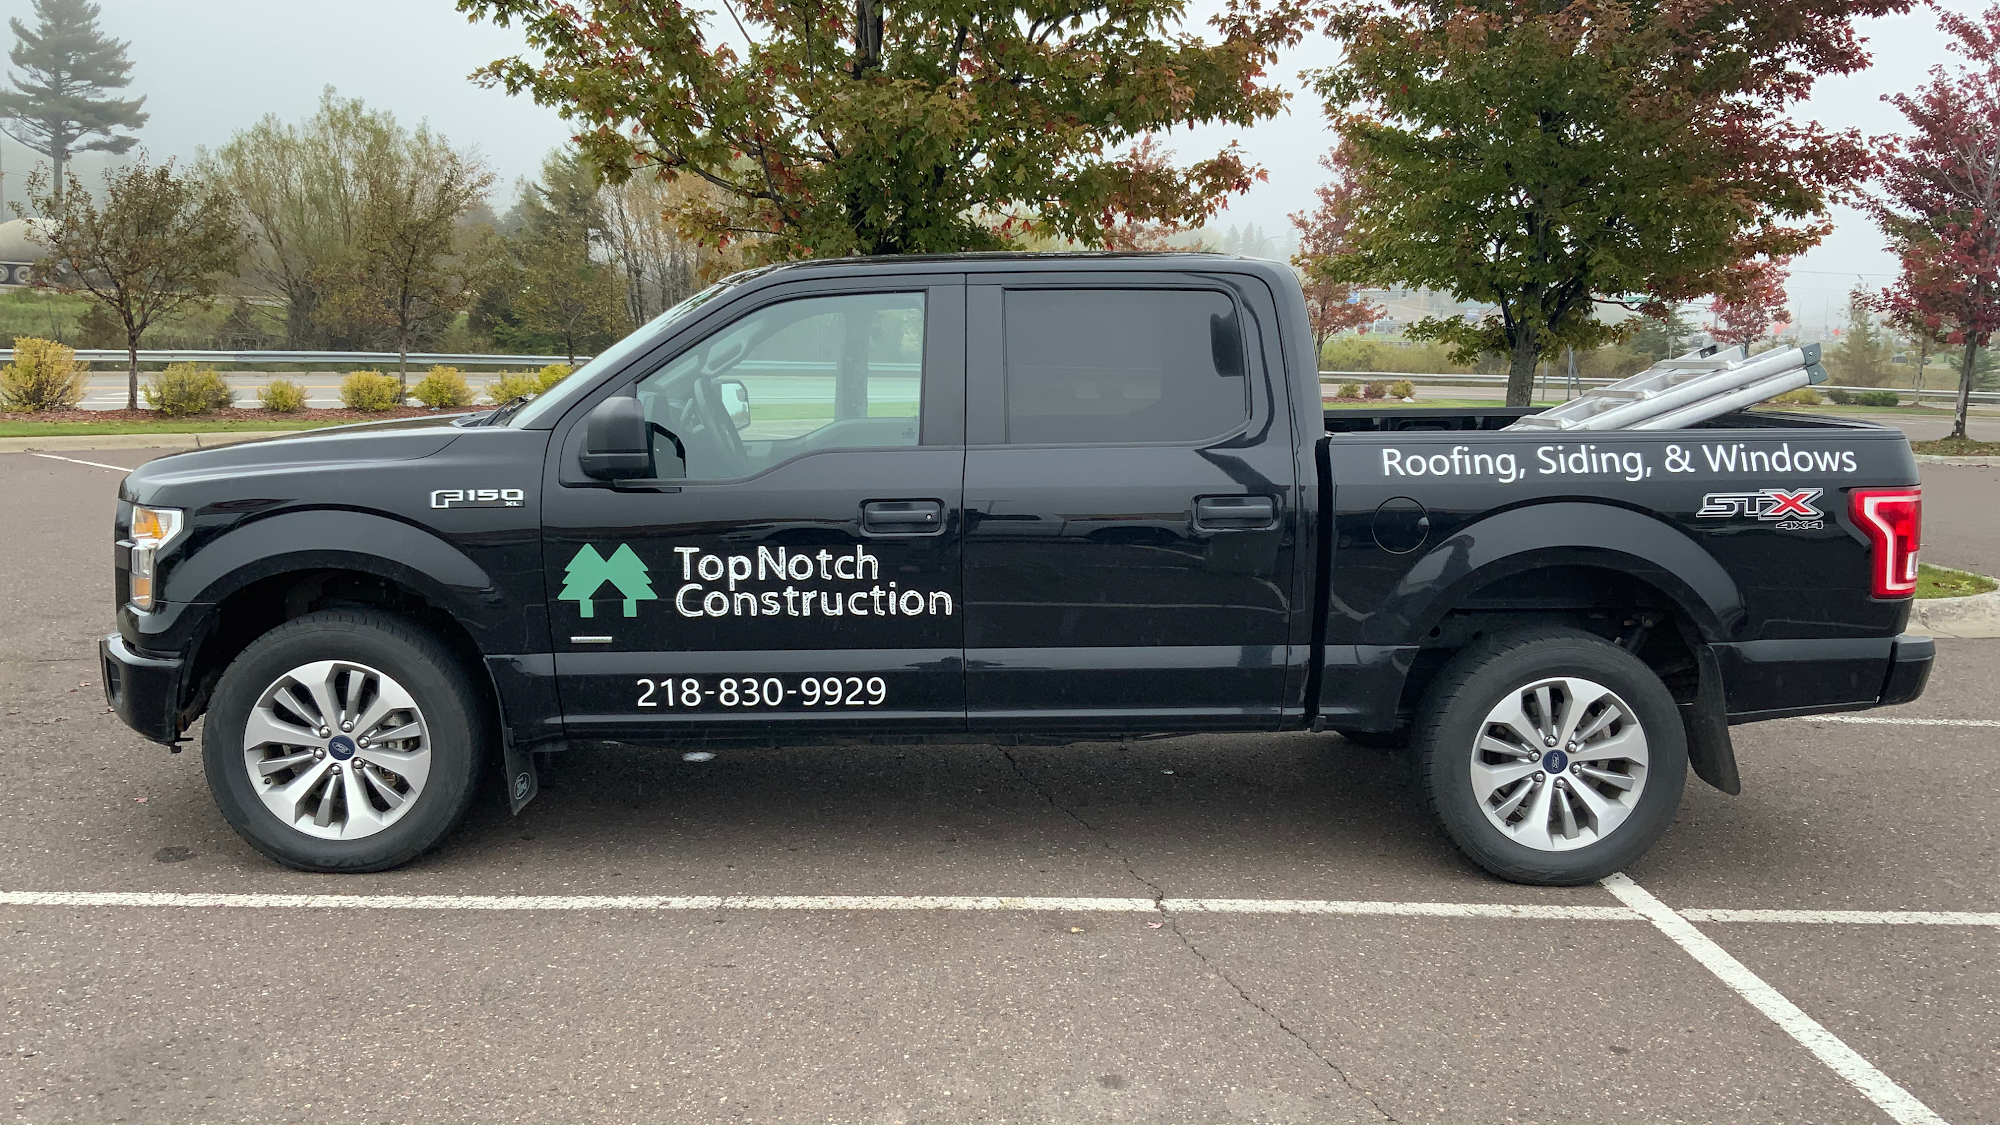 TopNotch Construction LLC